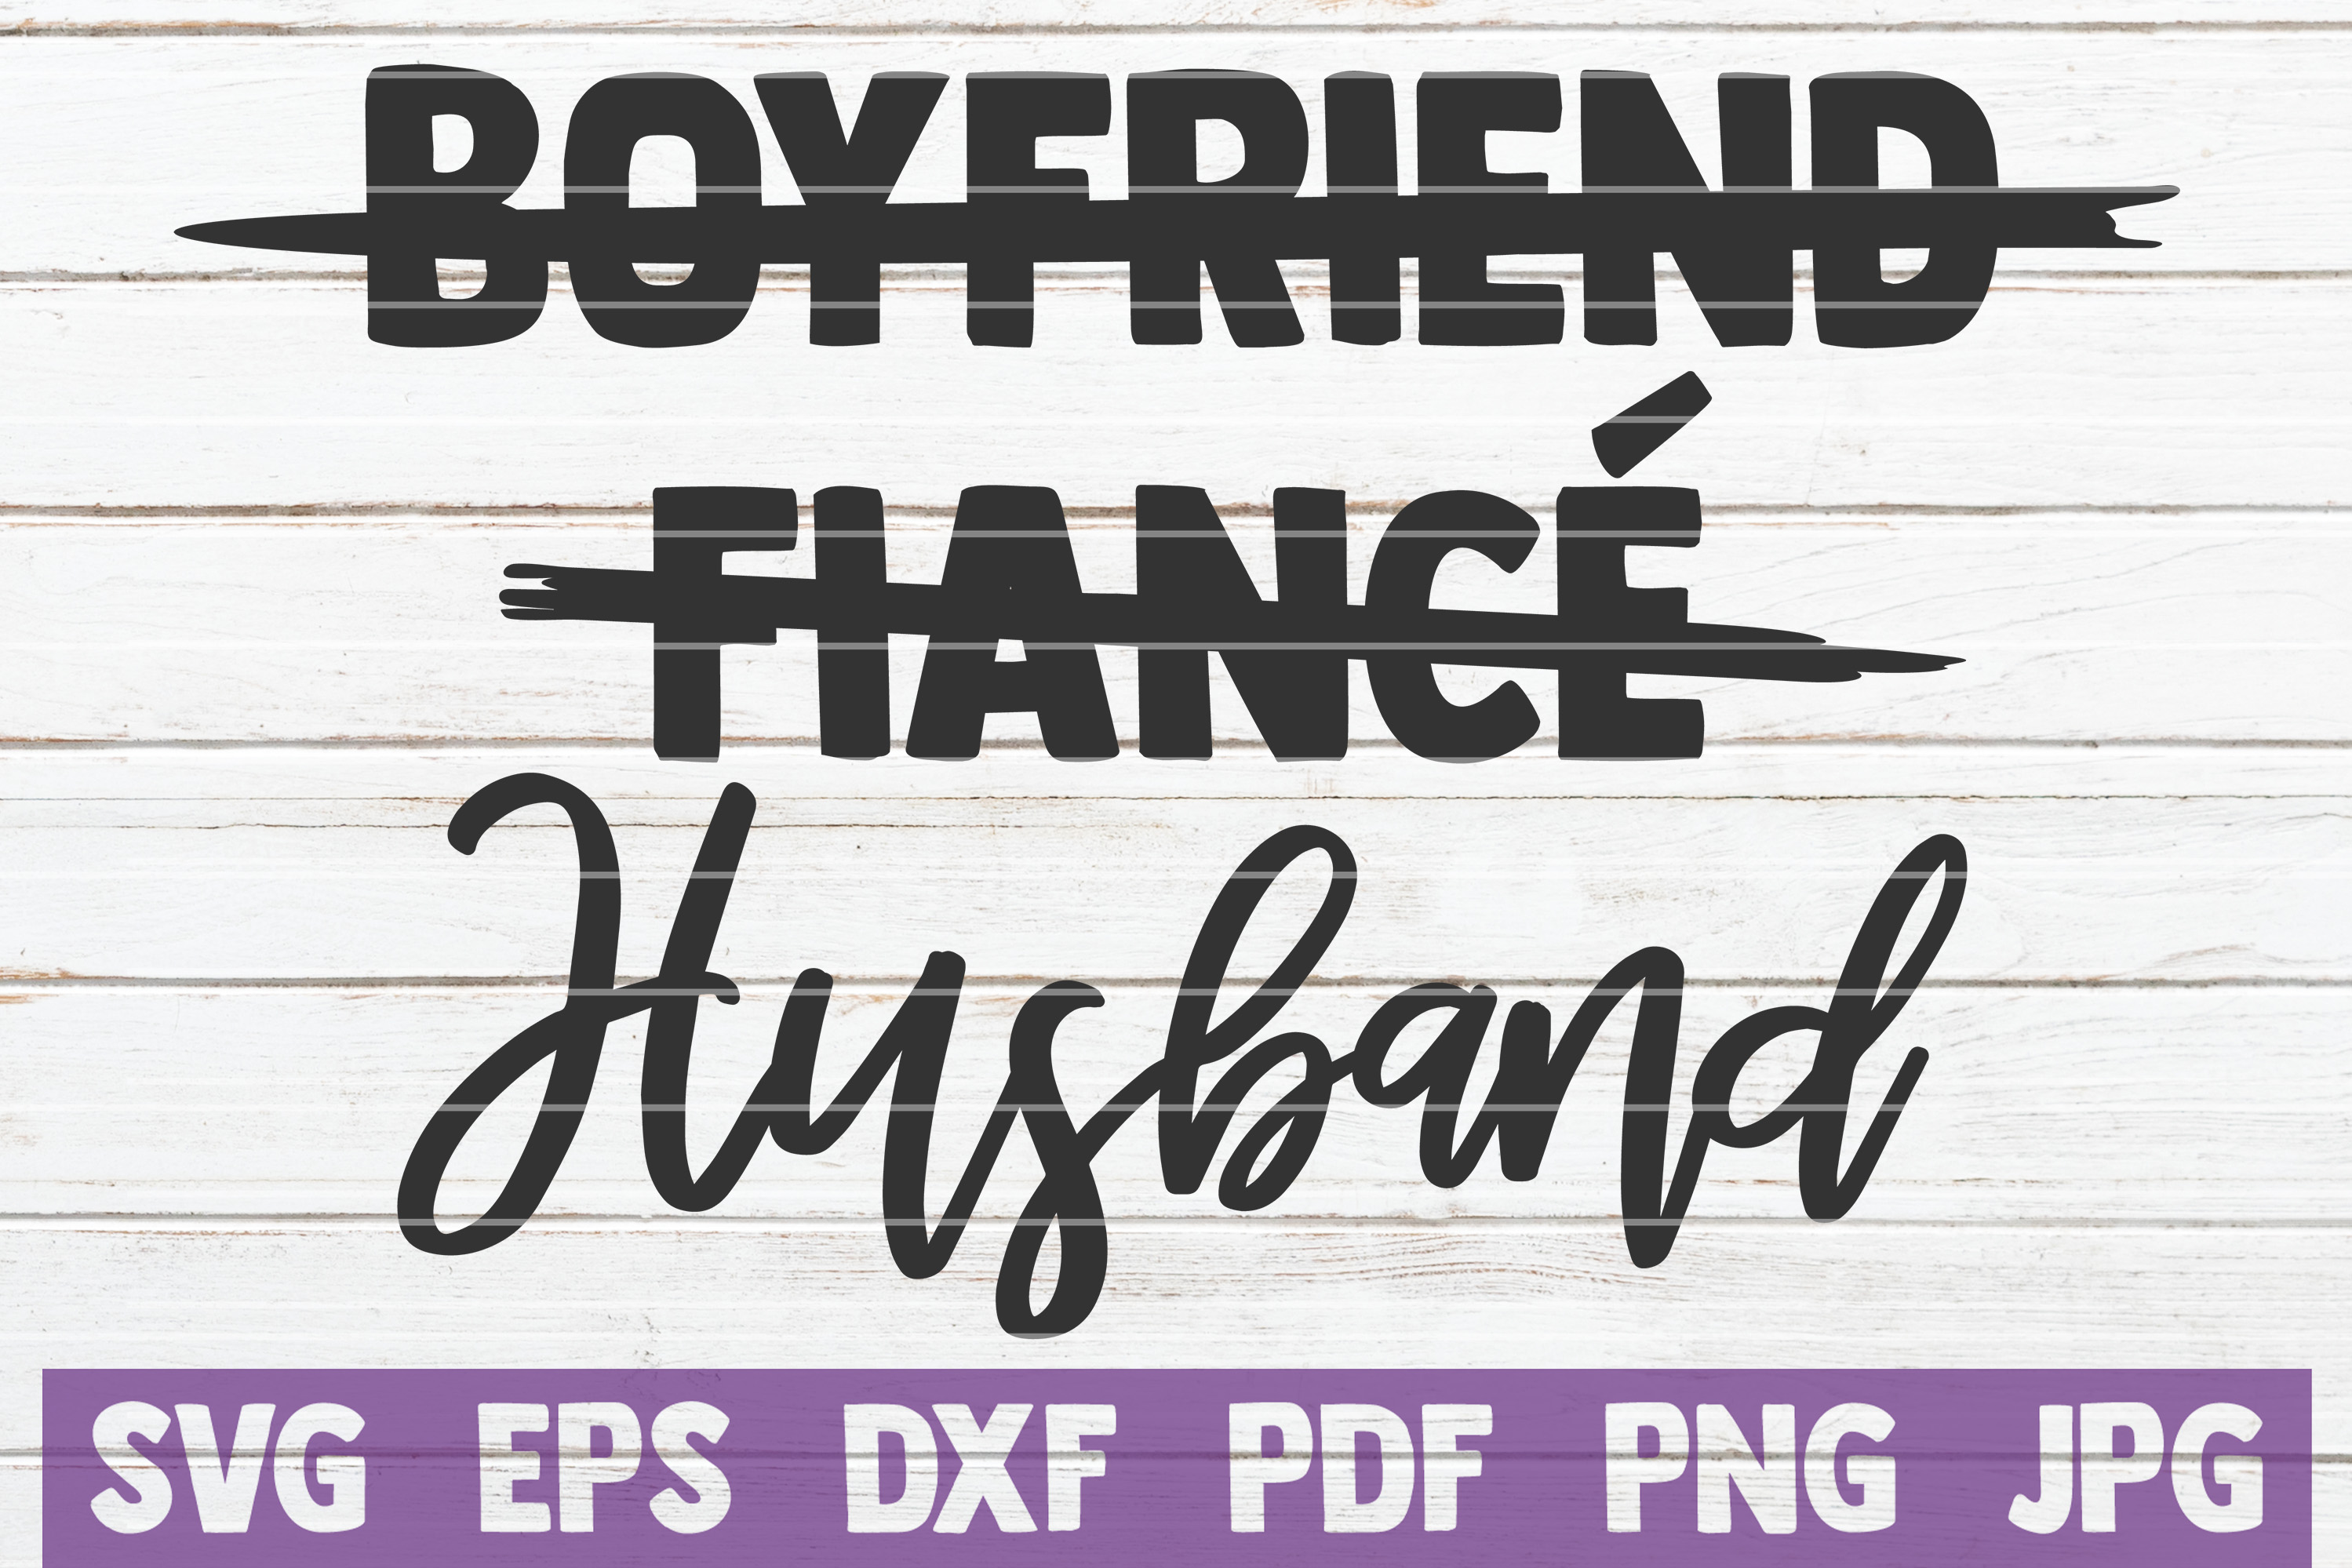 Download Girlfriend/Boyfriend Fiance Wife/Husband SVG Cut file ...